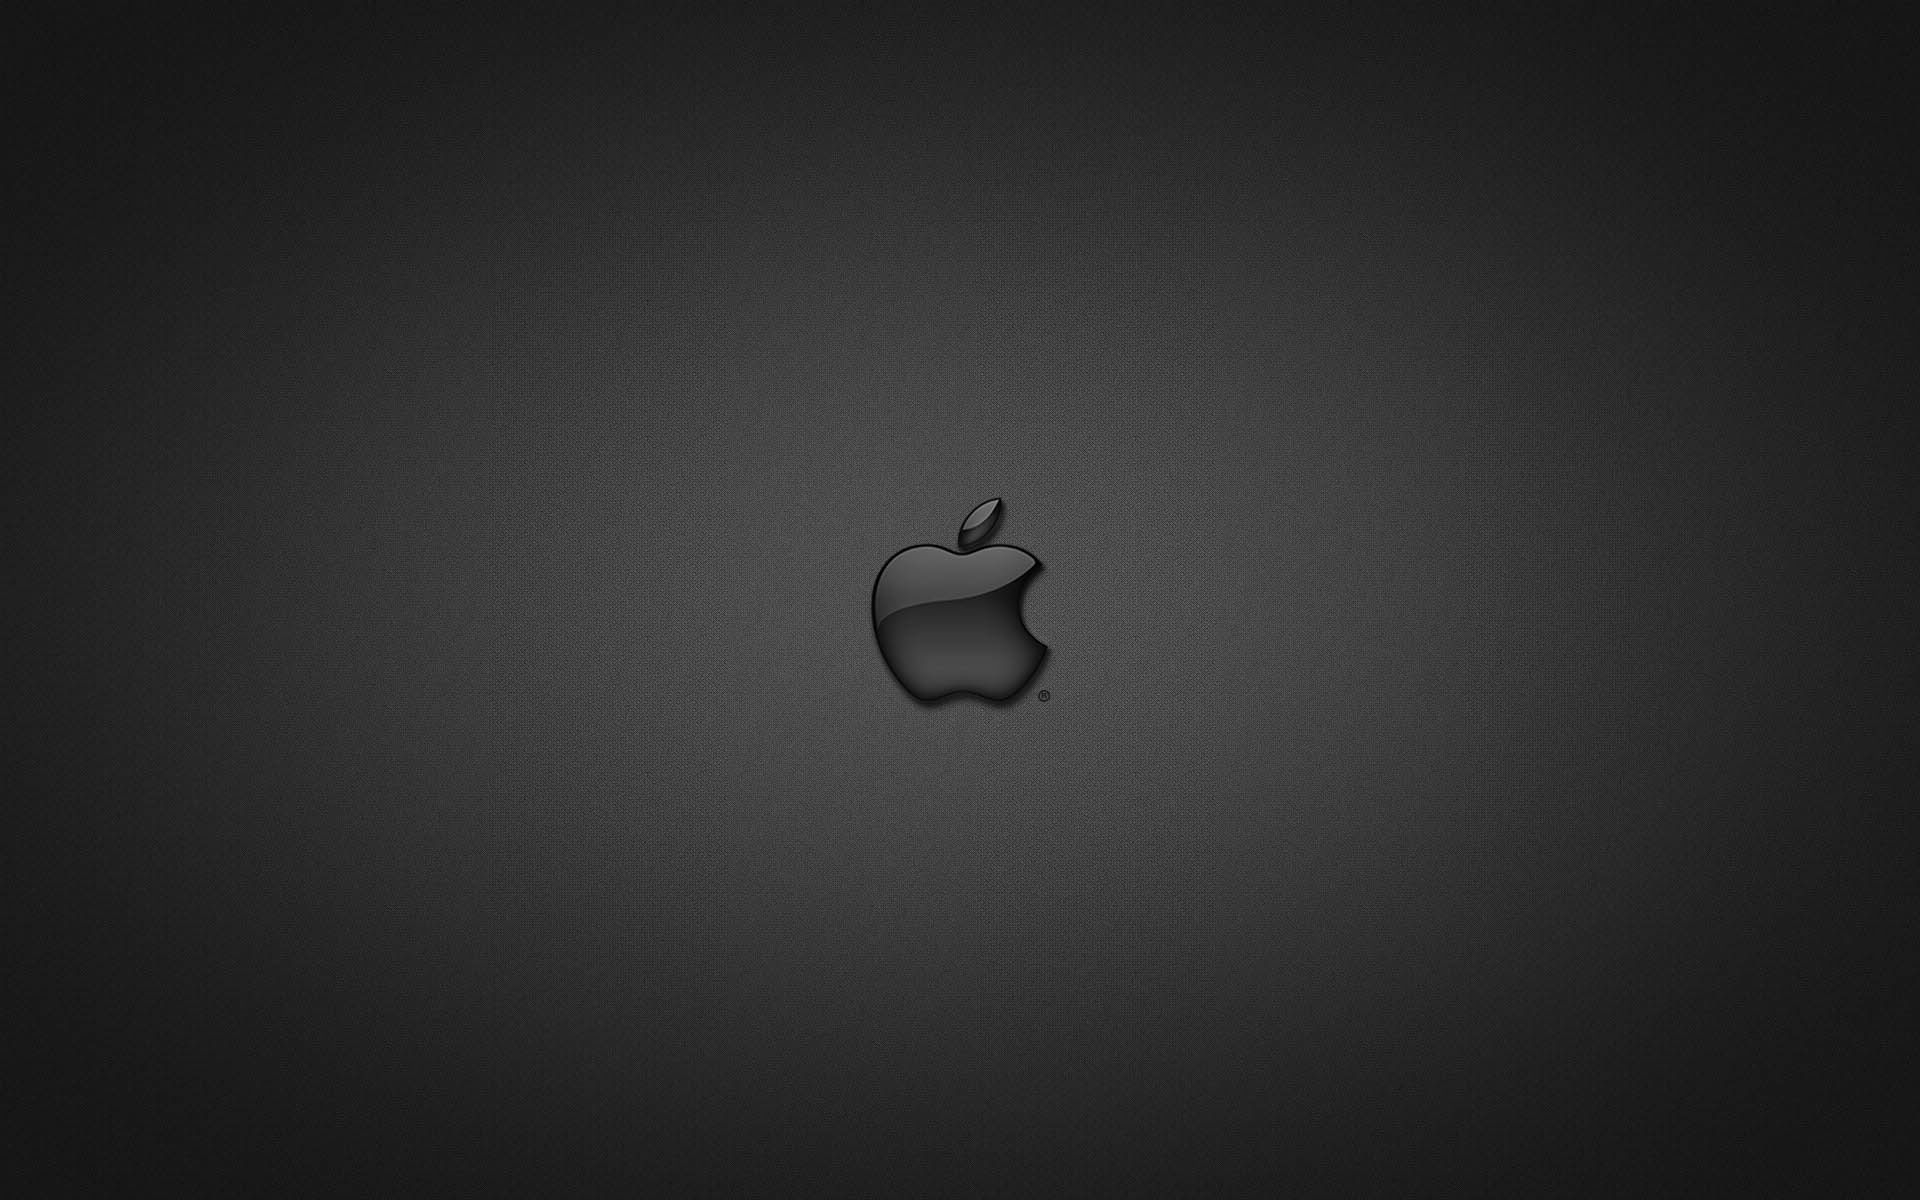 Apple in Glass Black Wallpaper in jpg format for free download